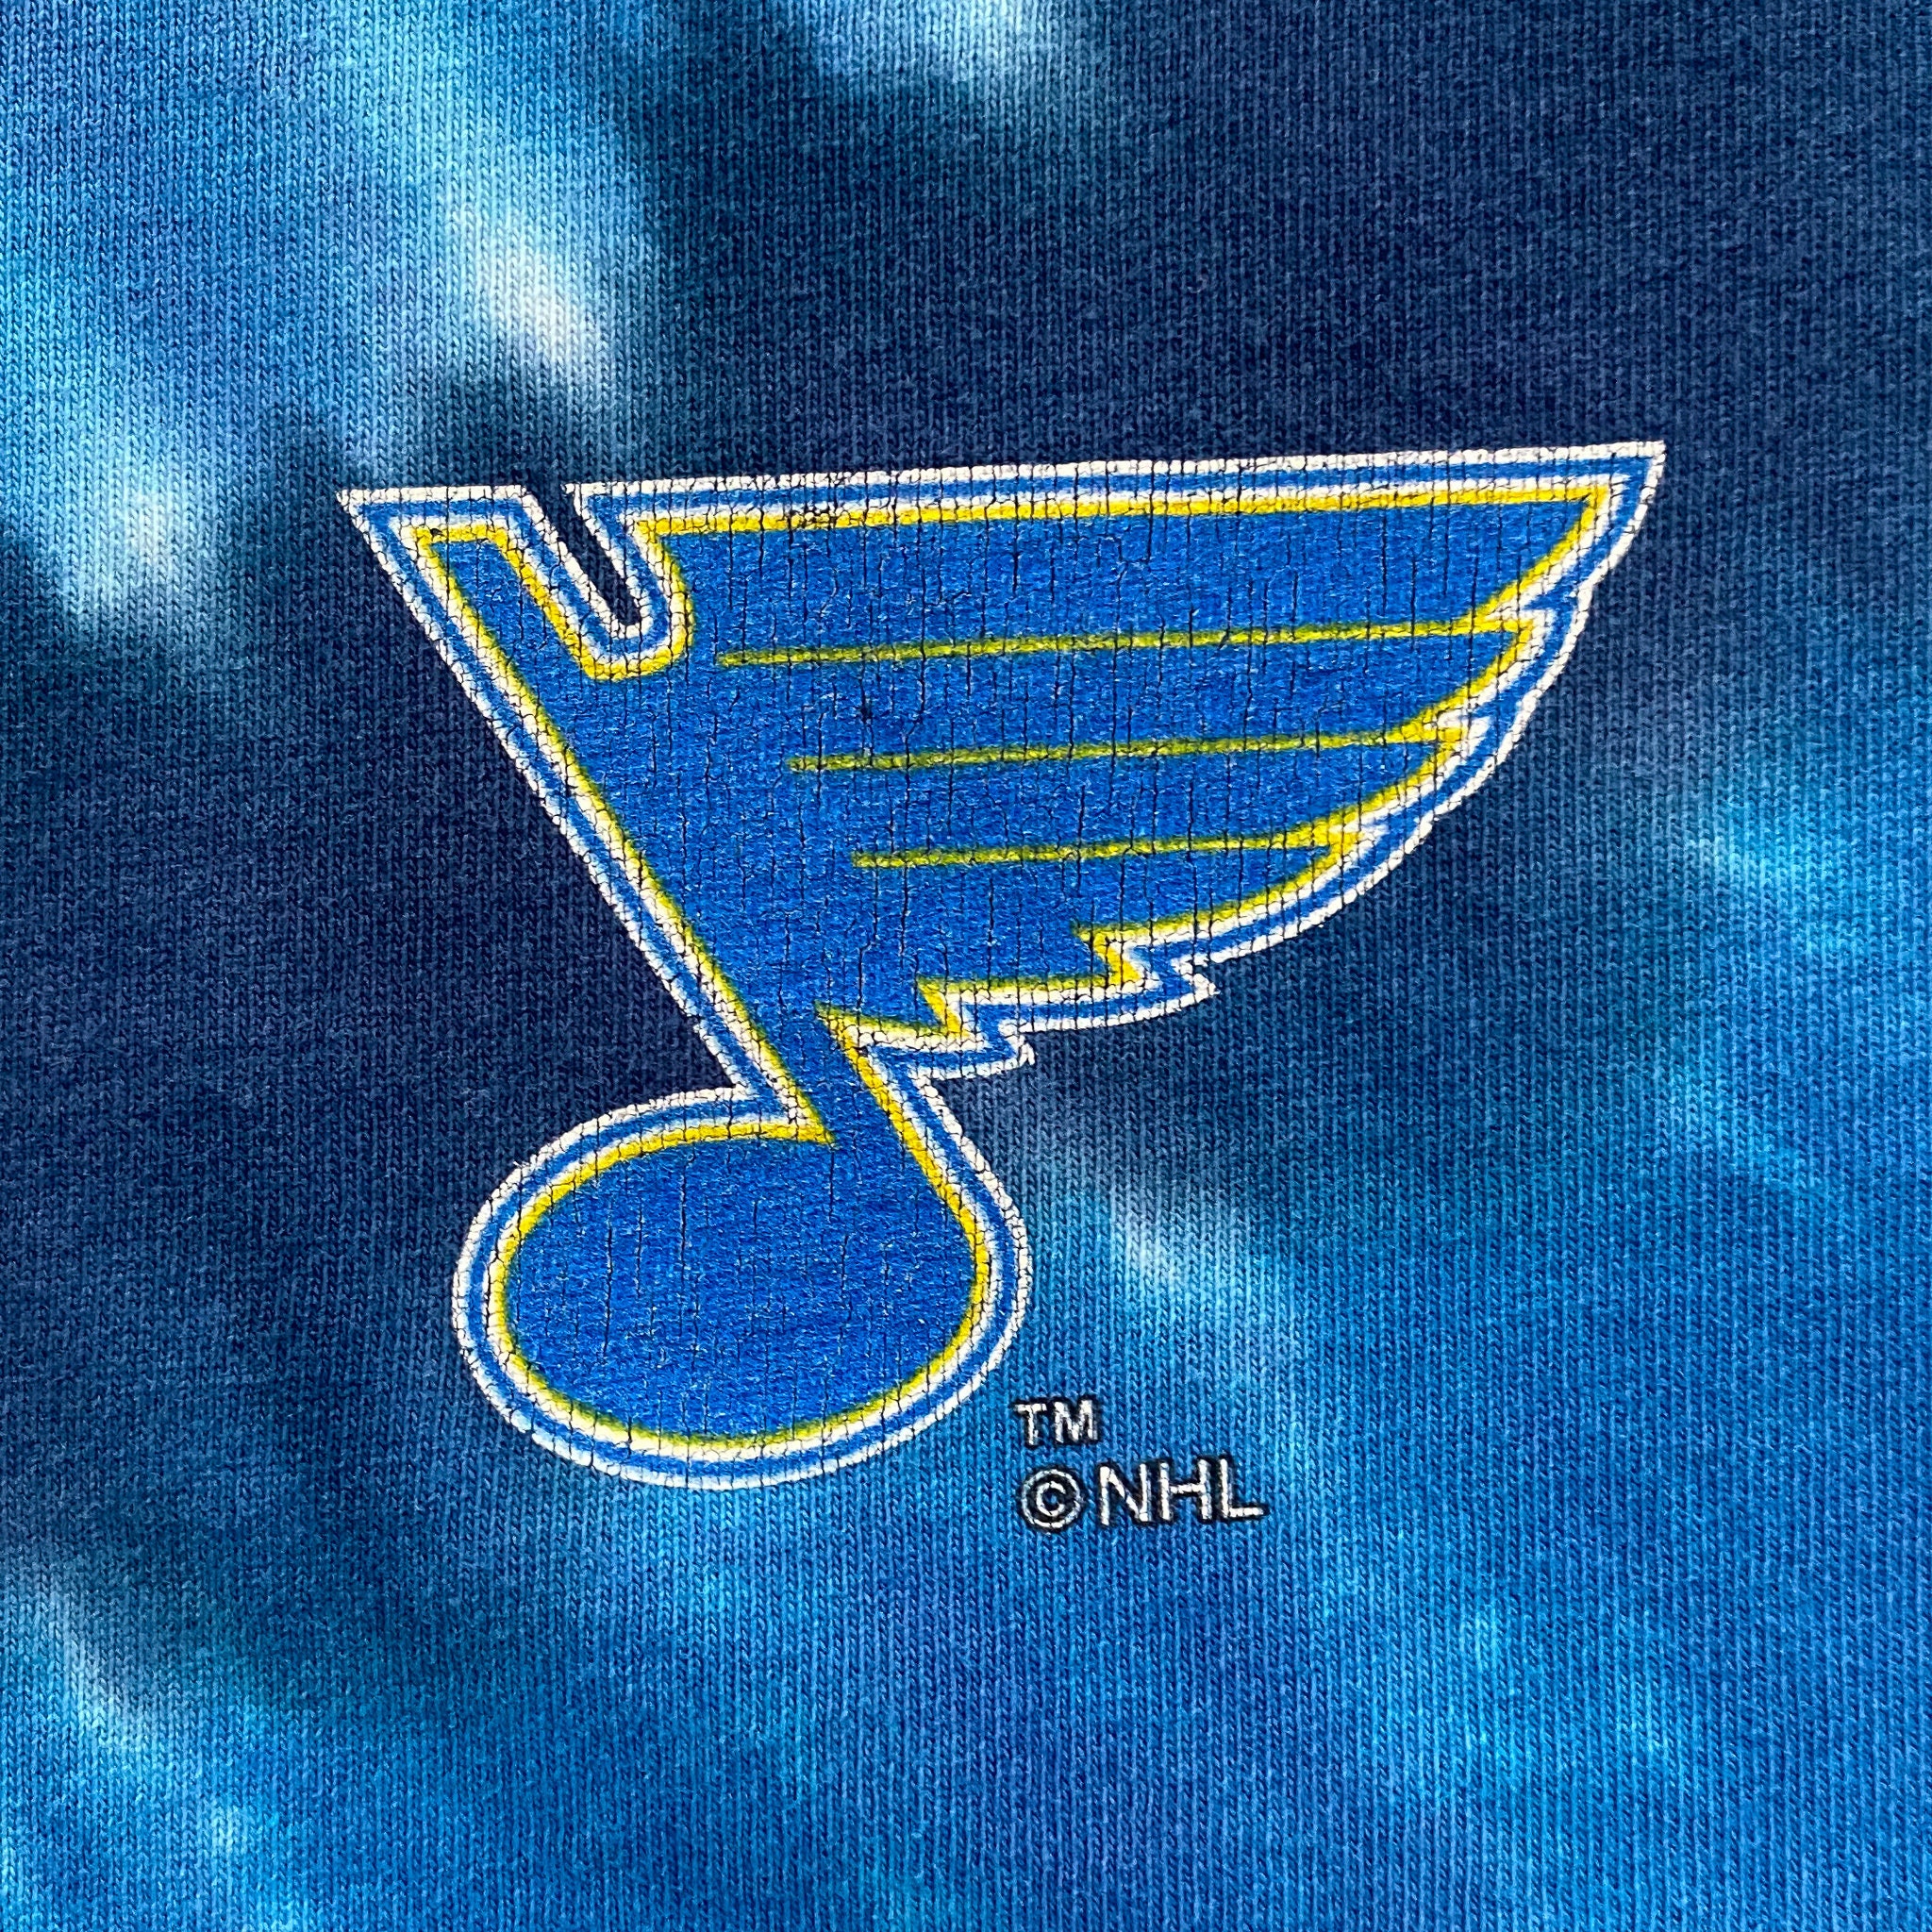 KoolThingTeez 90s/00s St. Louis Blues NHL T-Shirt. Vintage 1990s/2000s St. Louis Blues Liquid Blue Tie Dye Tee. Made in USA/Mexico - Large 22.5 x 29.5